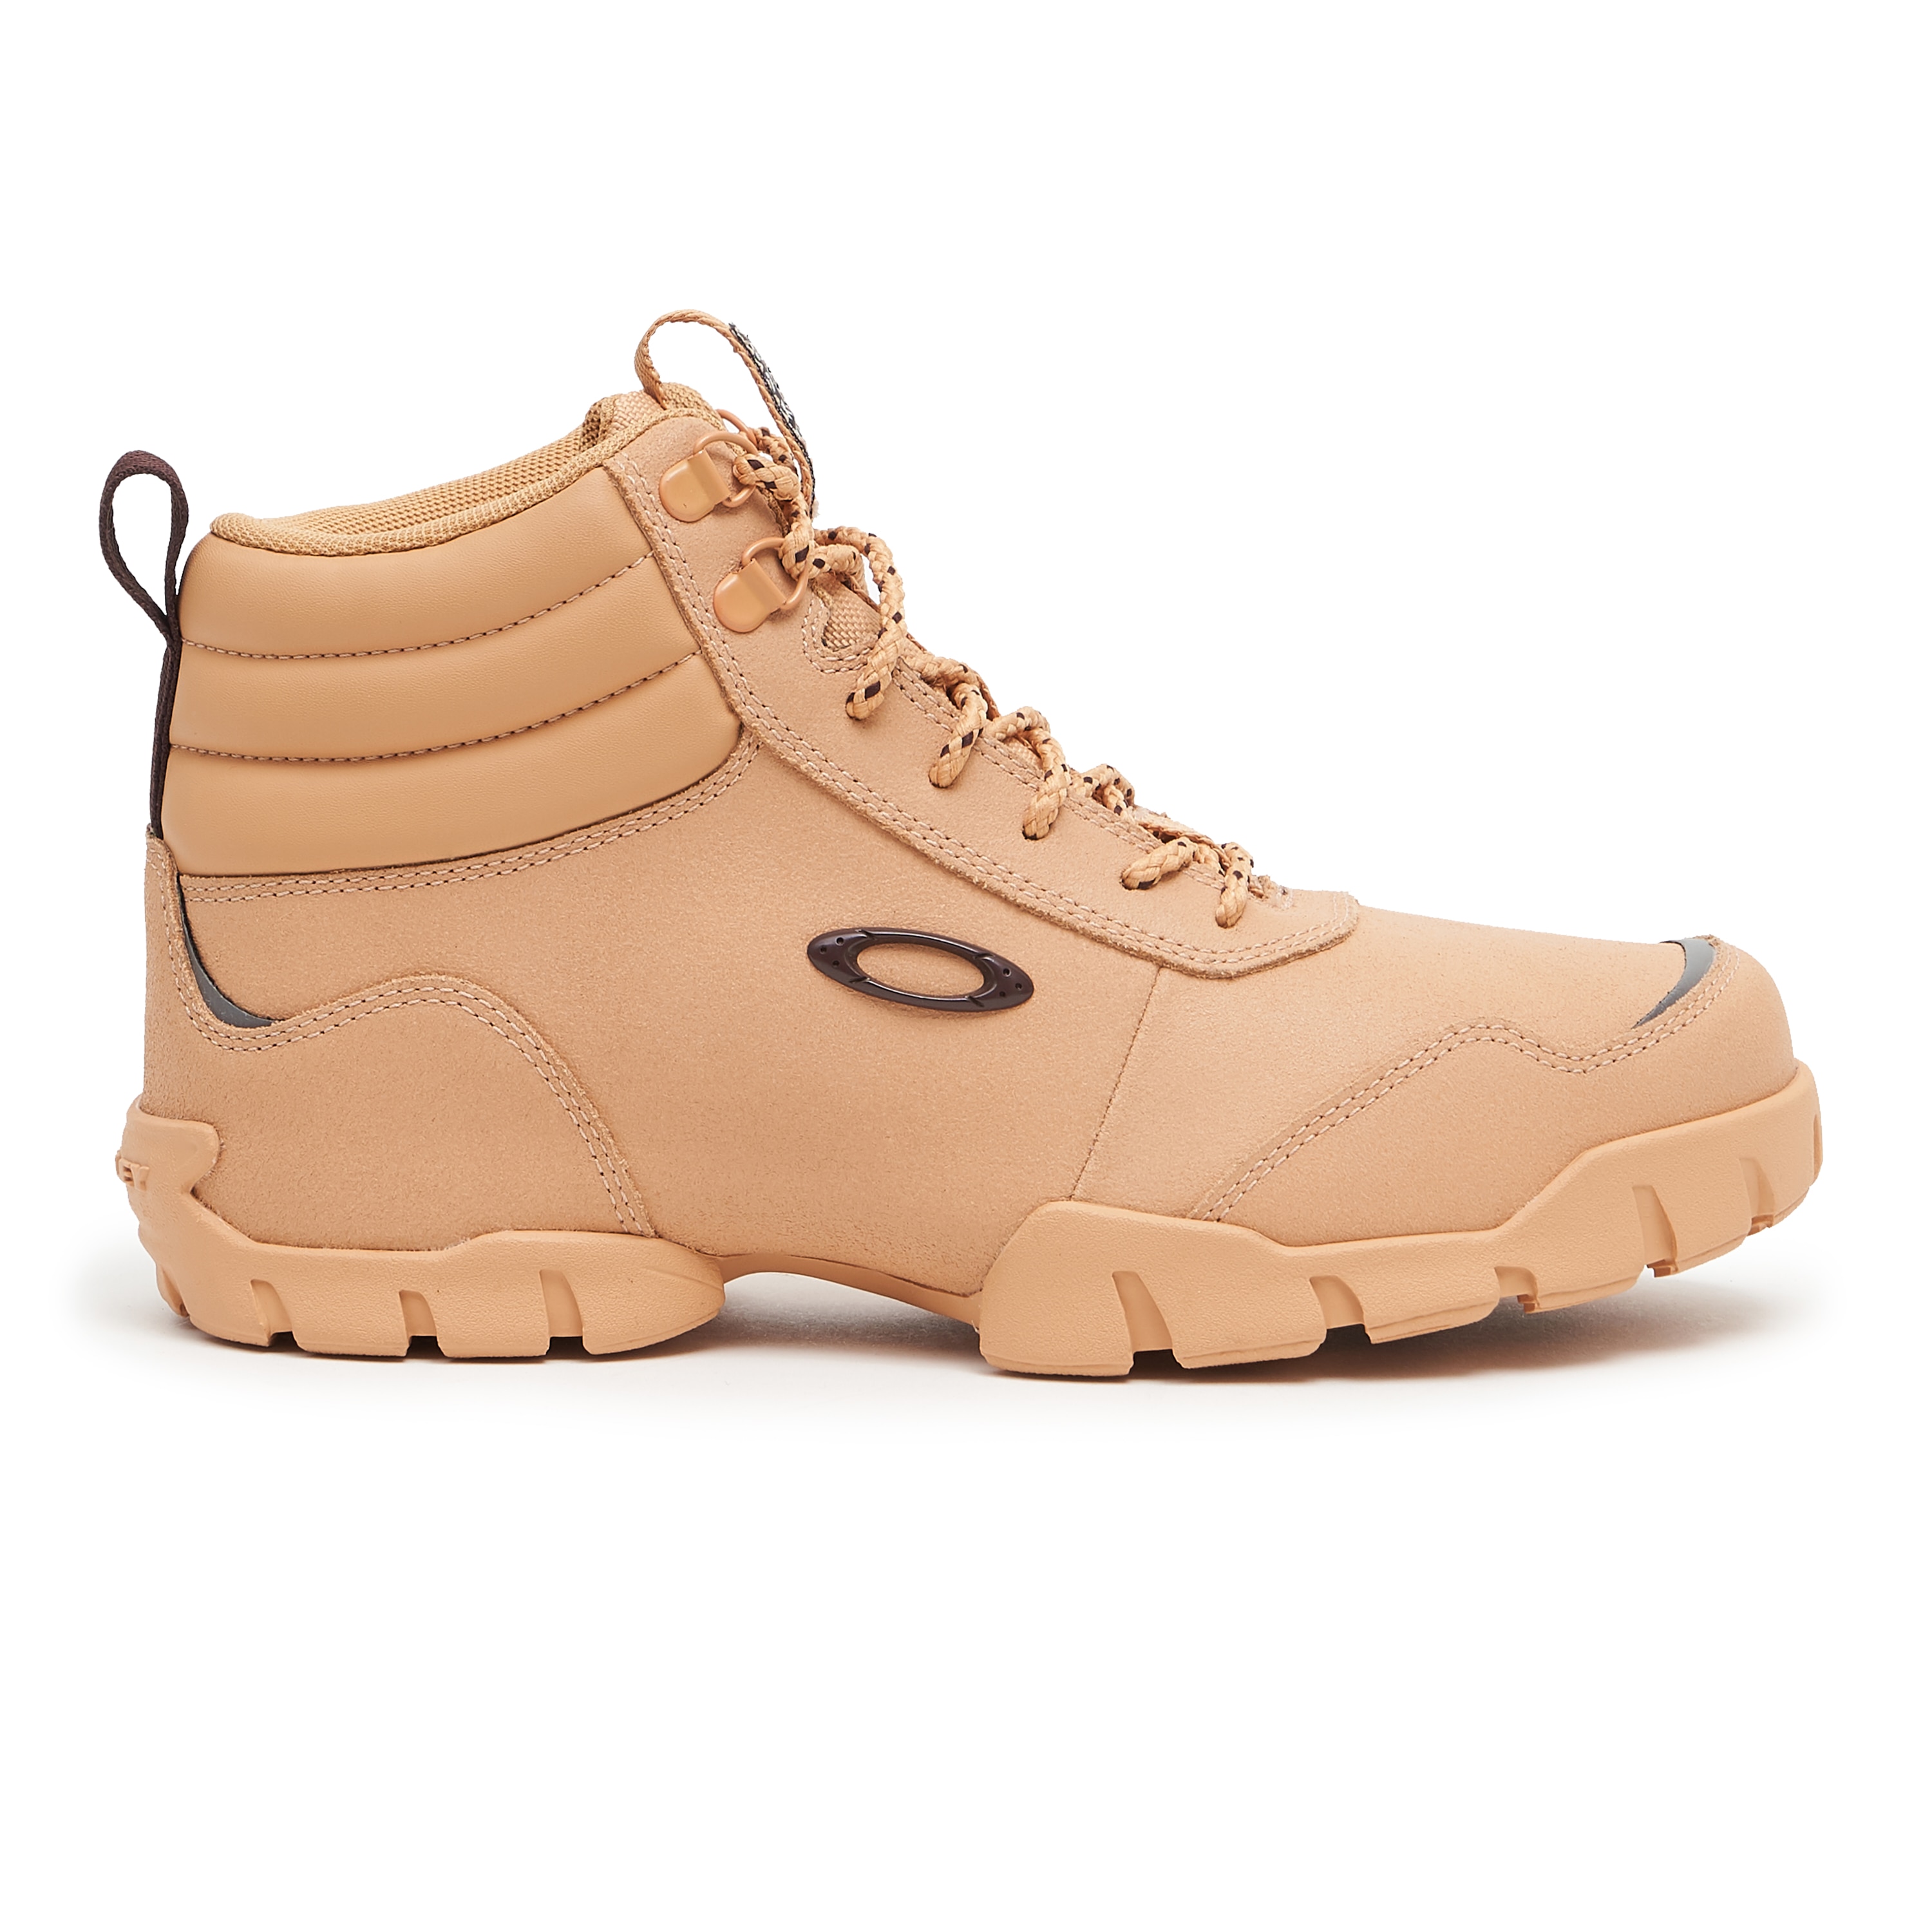 Oakley Outdoor Boots - New Clay - 12216-43B | Oakley JP Store